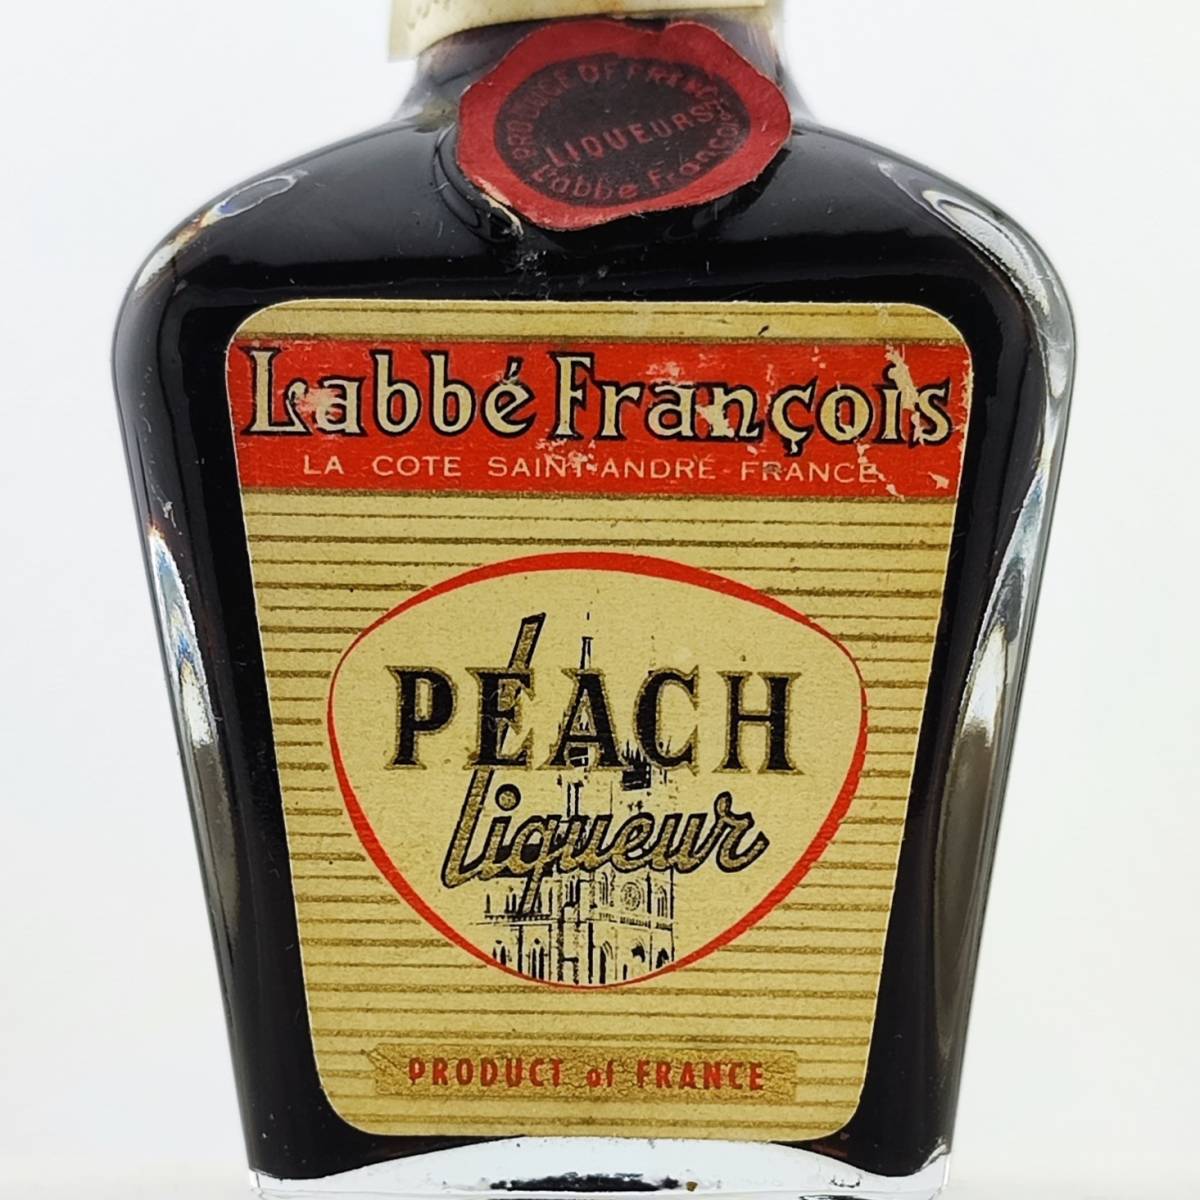 Labbe Francois CHERRY PEACH APRICOAT ORANGE Brandy Liqueur【チェリー アプリコット オレンジ ブランデー ピーチ】_画像7